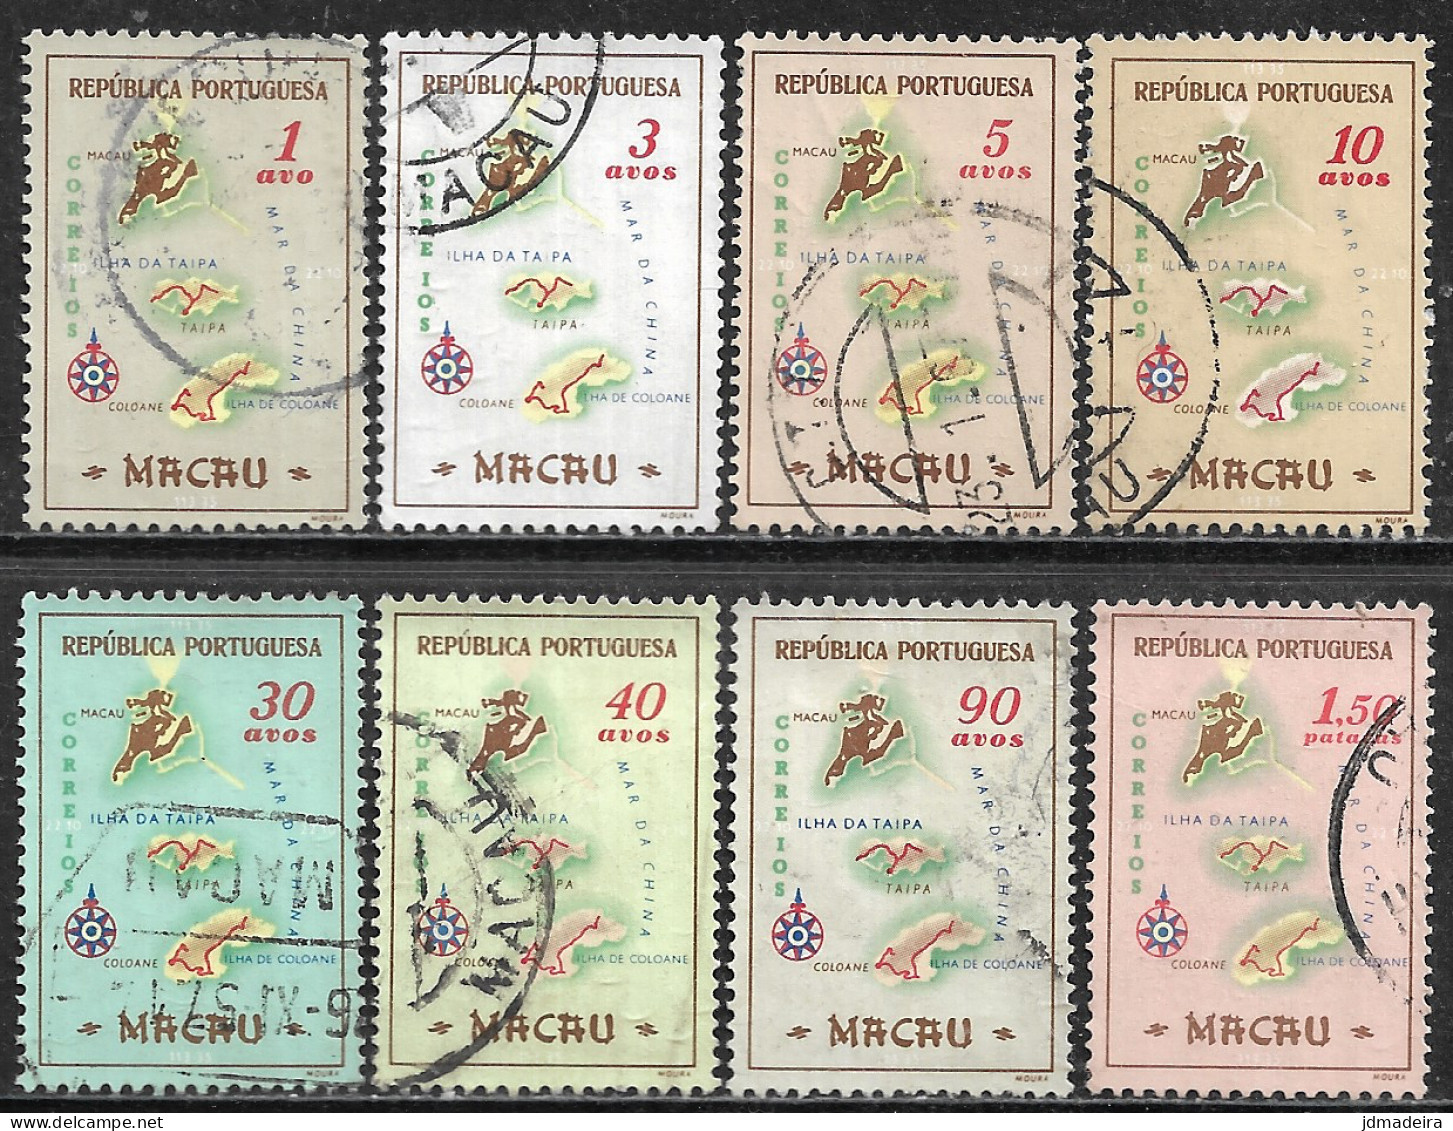 Macau Macao – 1956 Maps Used Set - Gebruikt